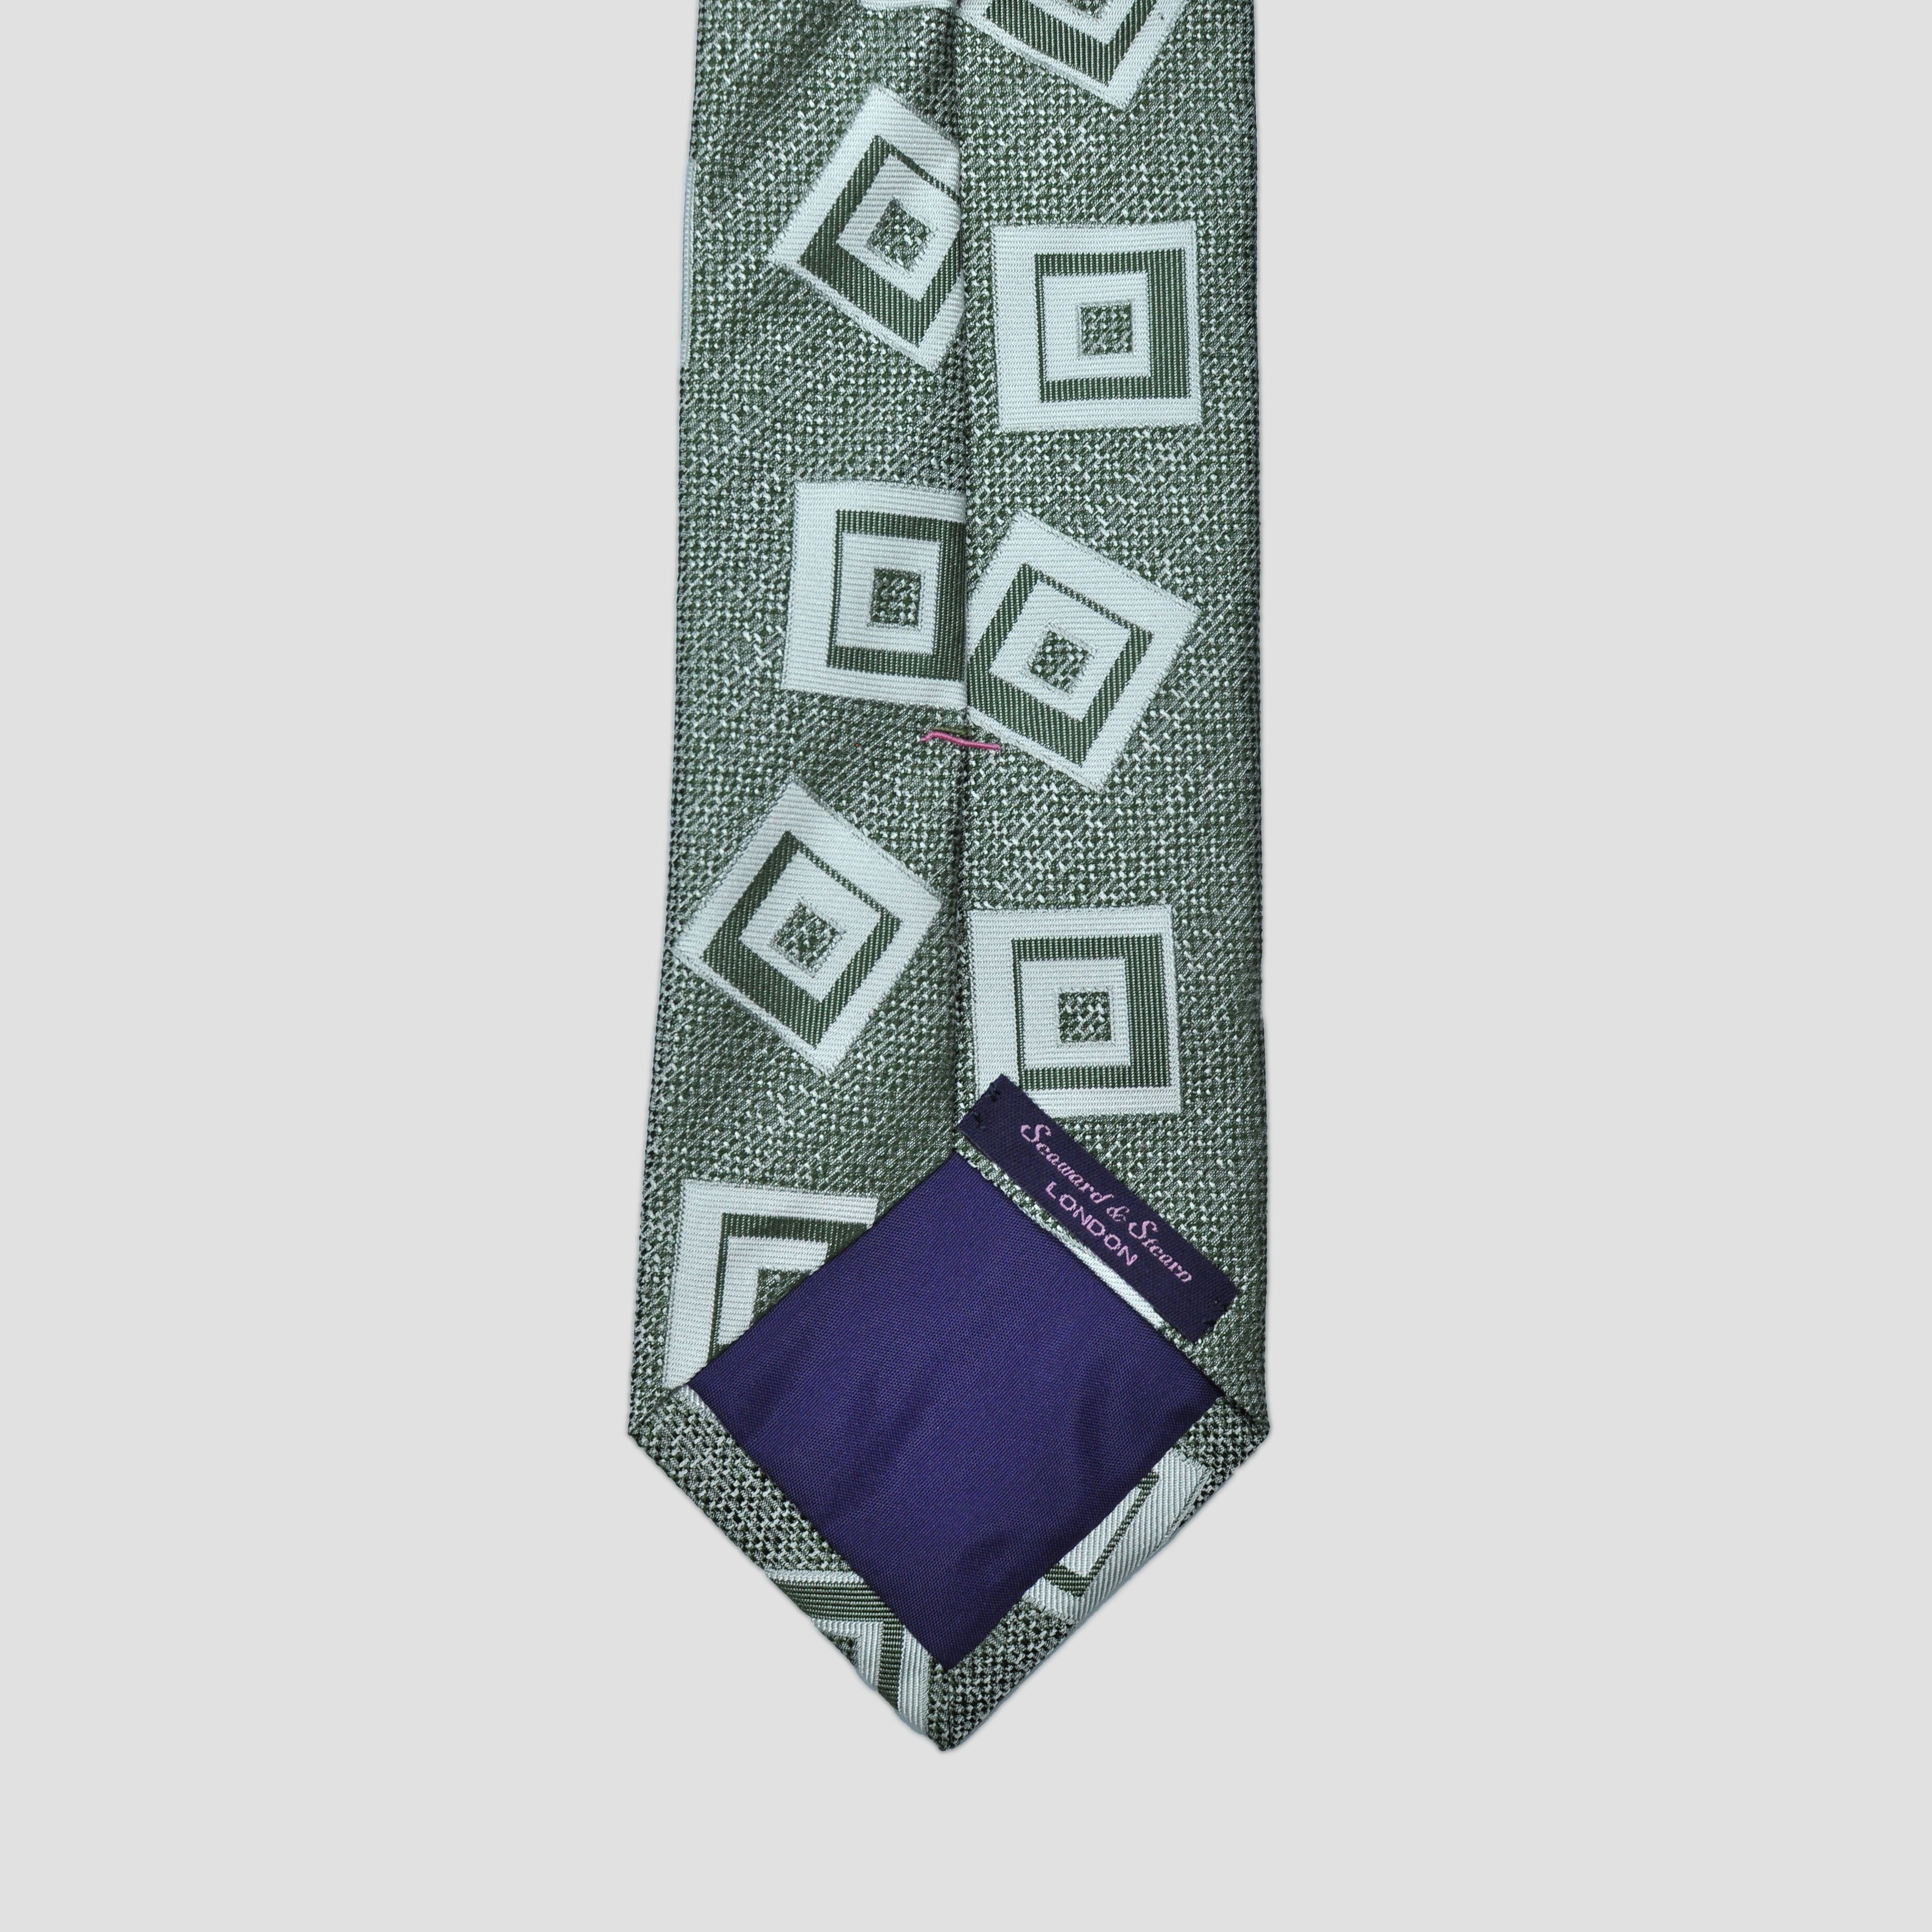 Retro Squares Natte Weave Silk Tie in Mink Grey